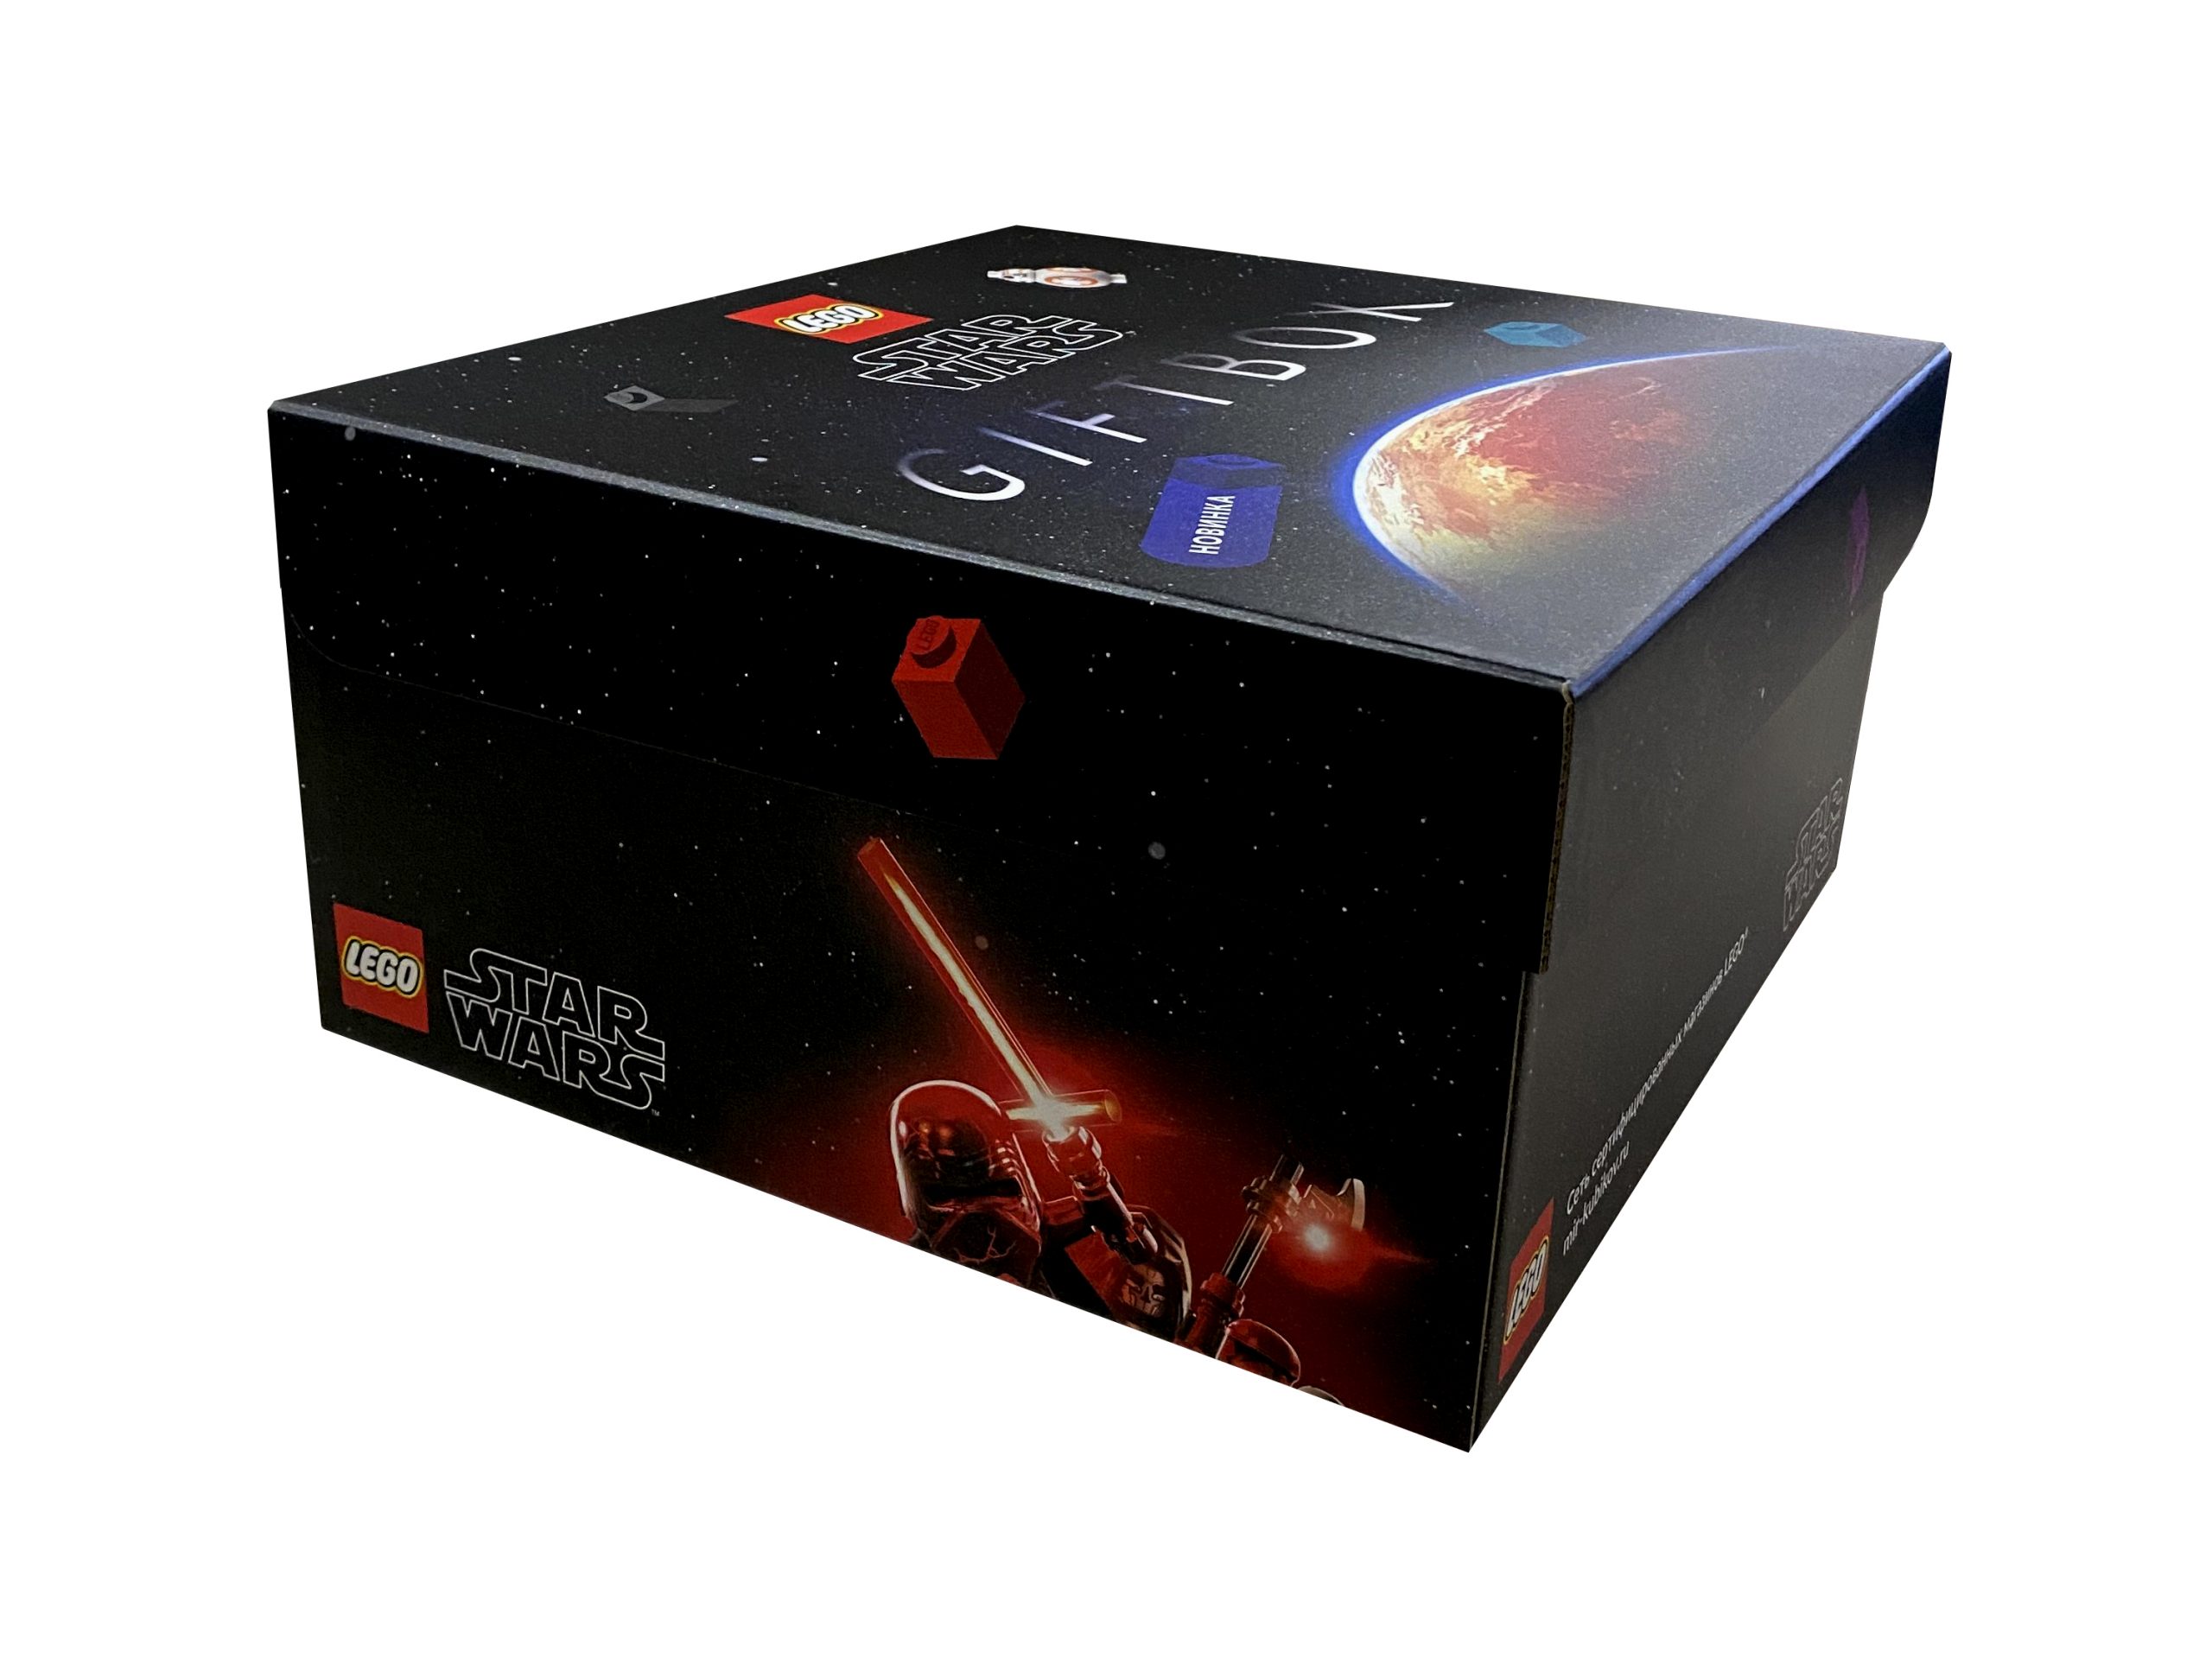 https://www.thebrickfan.com/wp-content/uploads/2020/10/LEGO-Star-Wars-Gift-Box-2-scaled.jpg